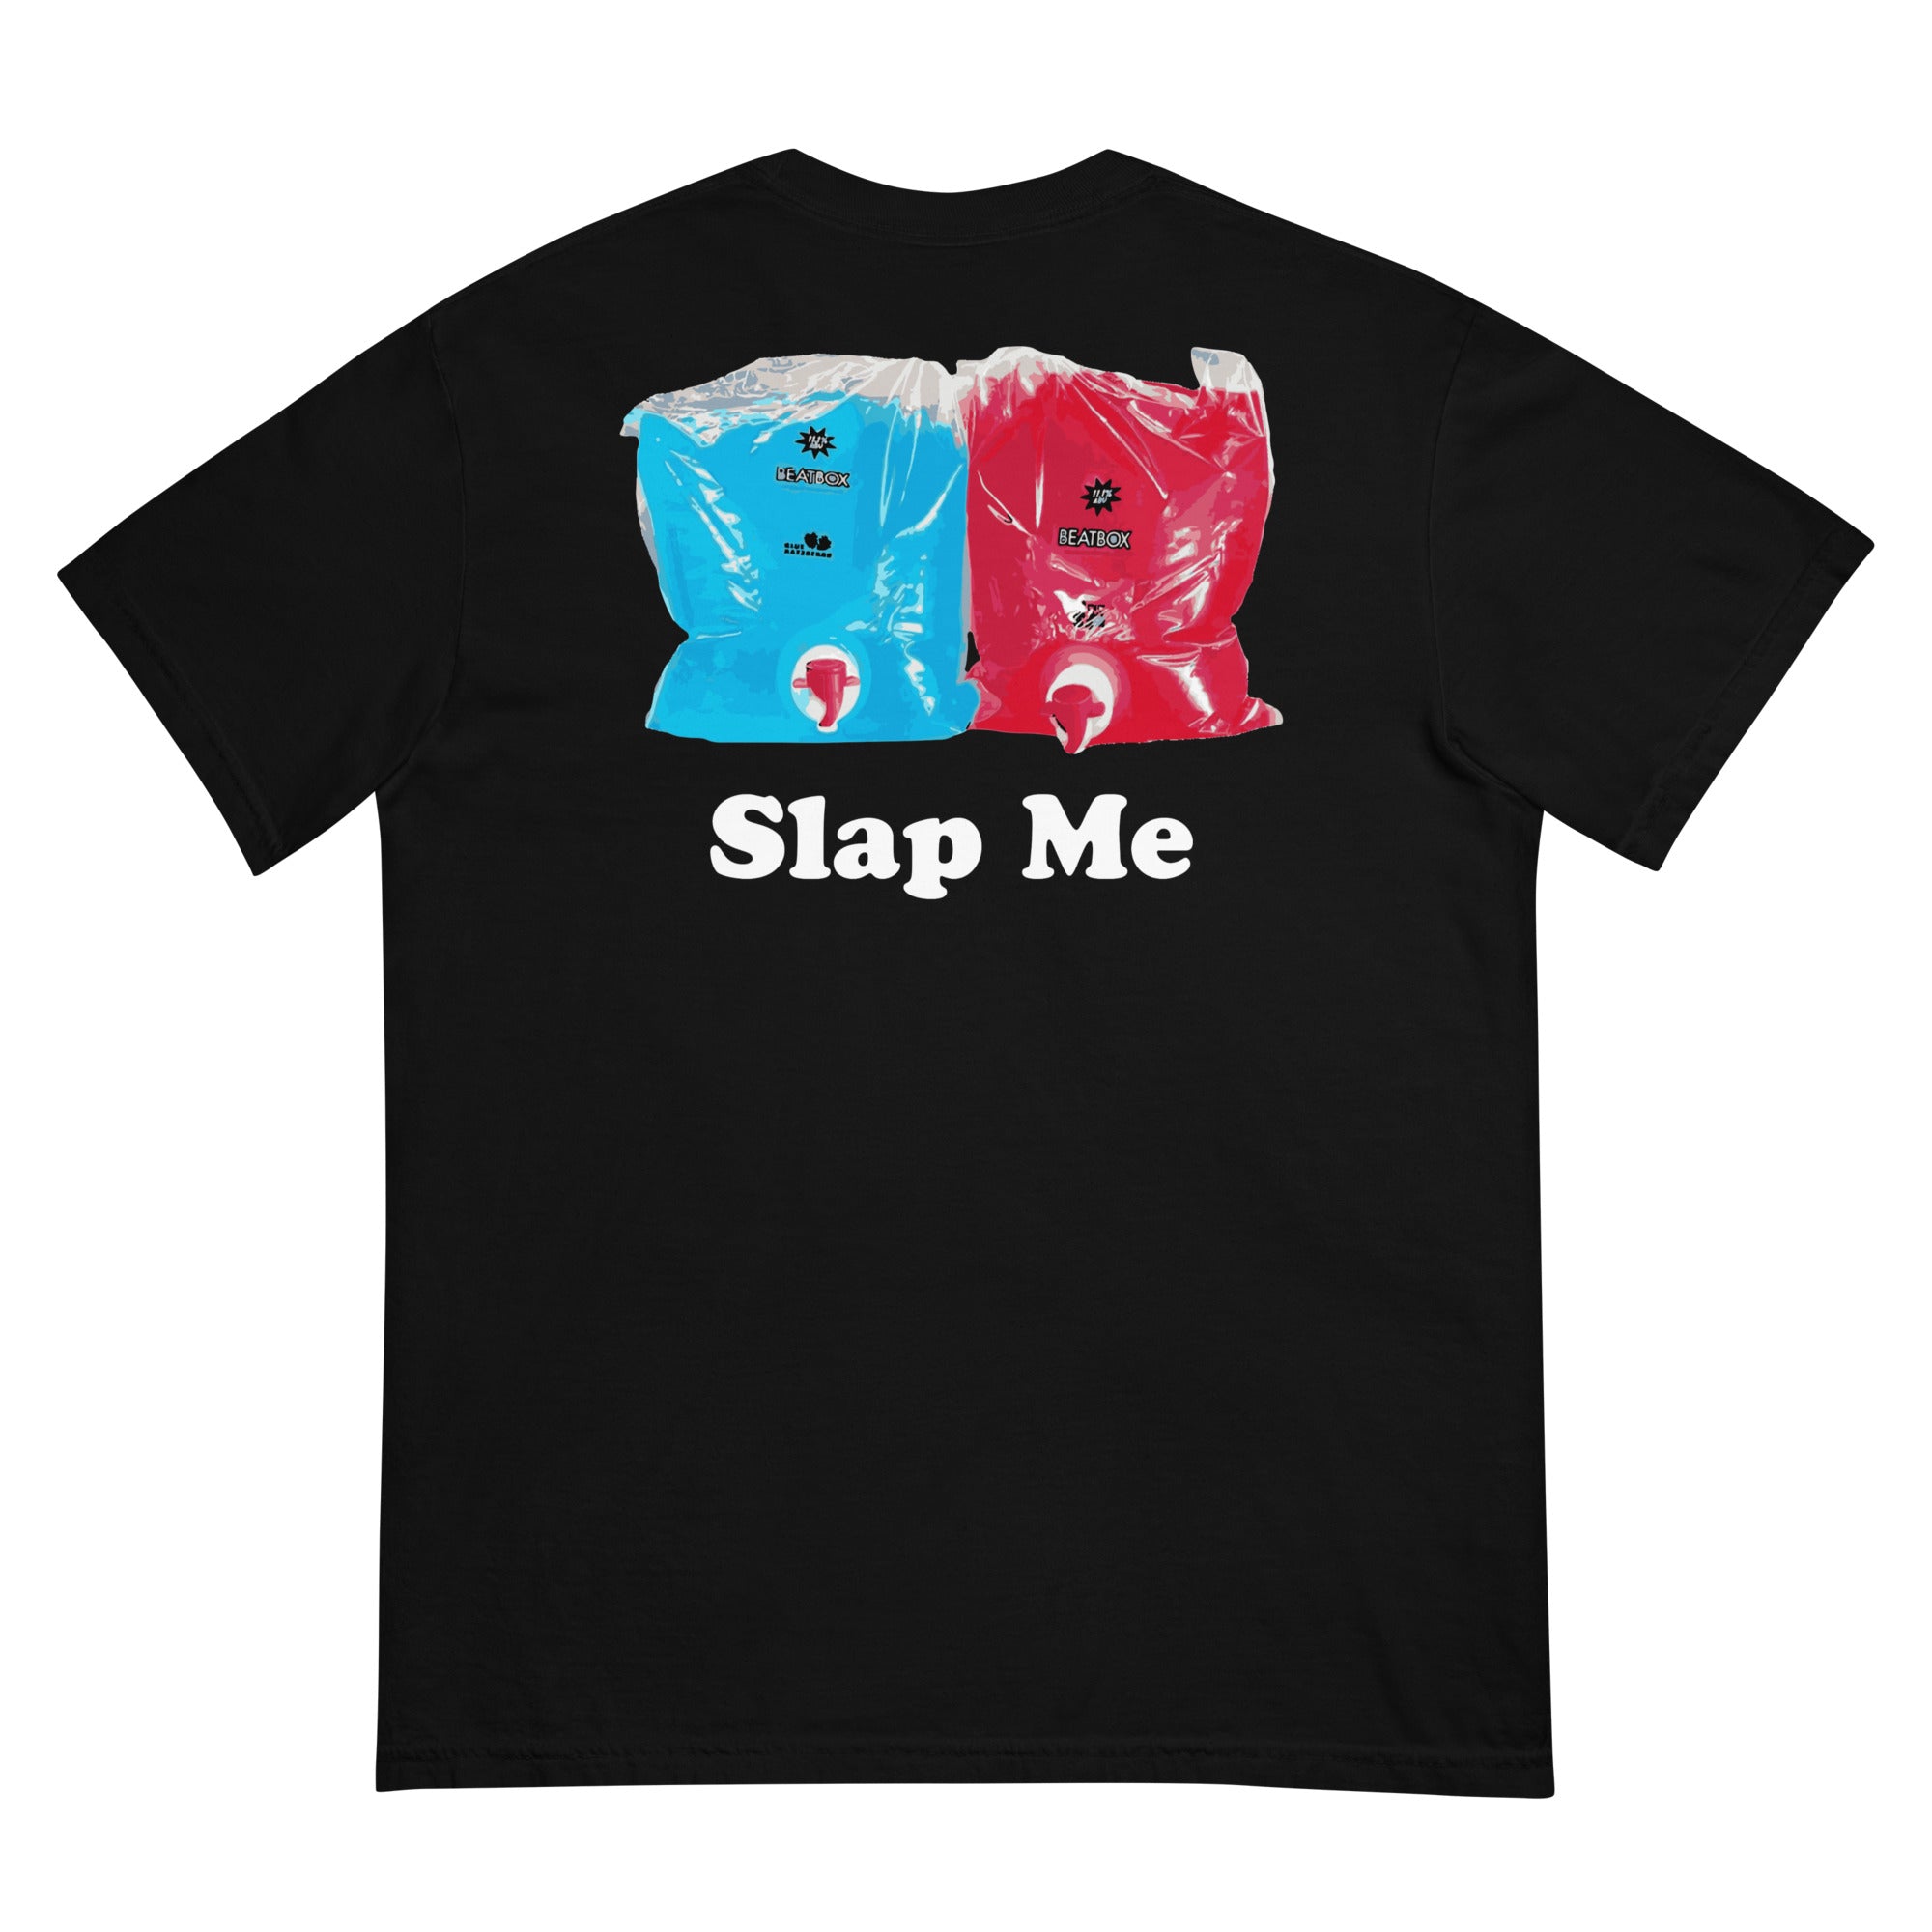 Slap Me heavyweight t-shirt